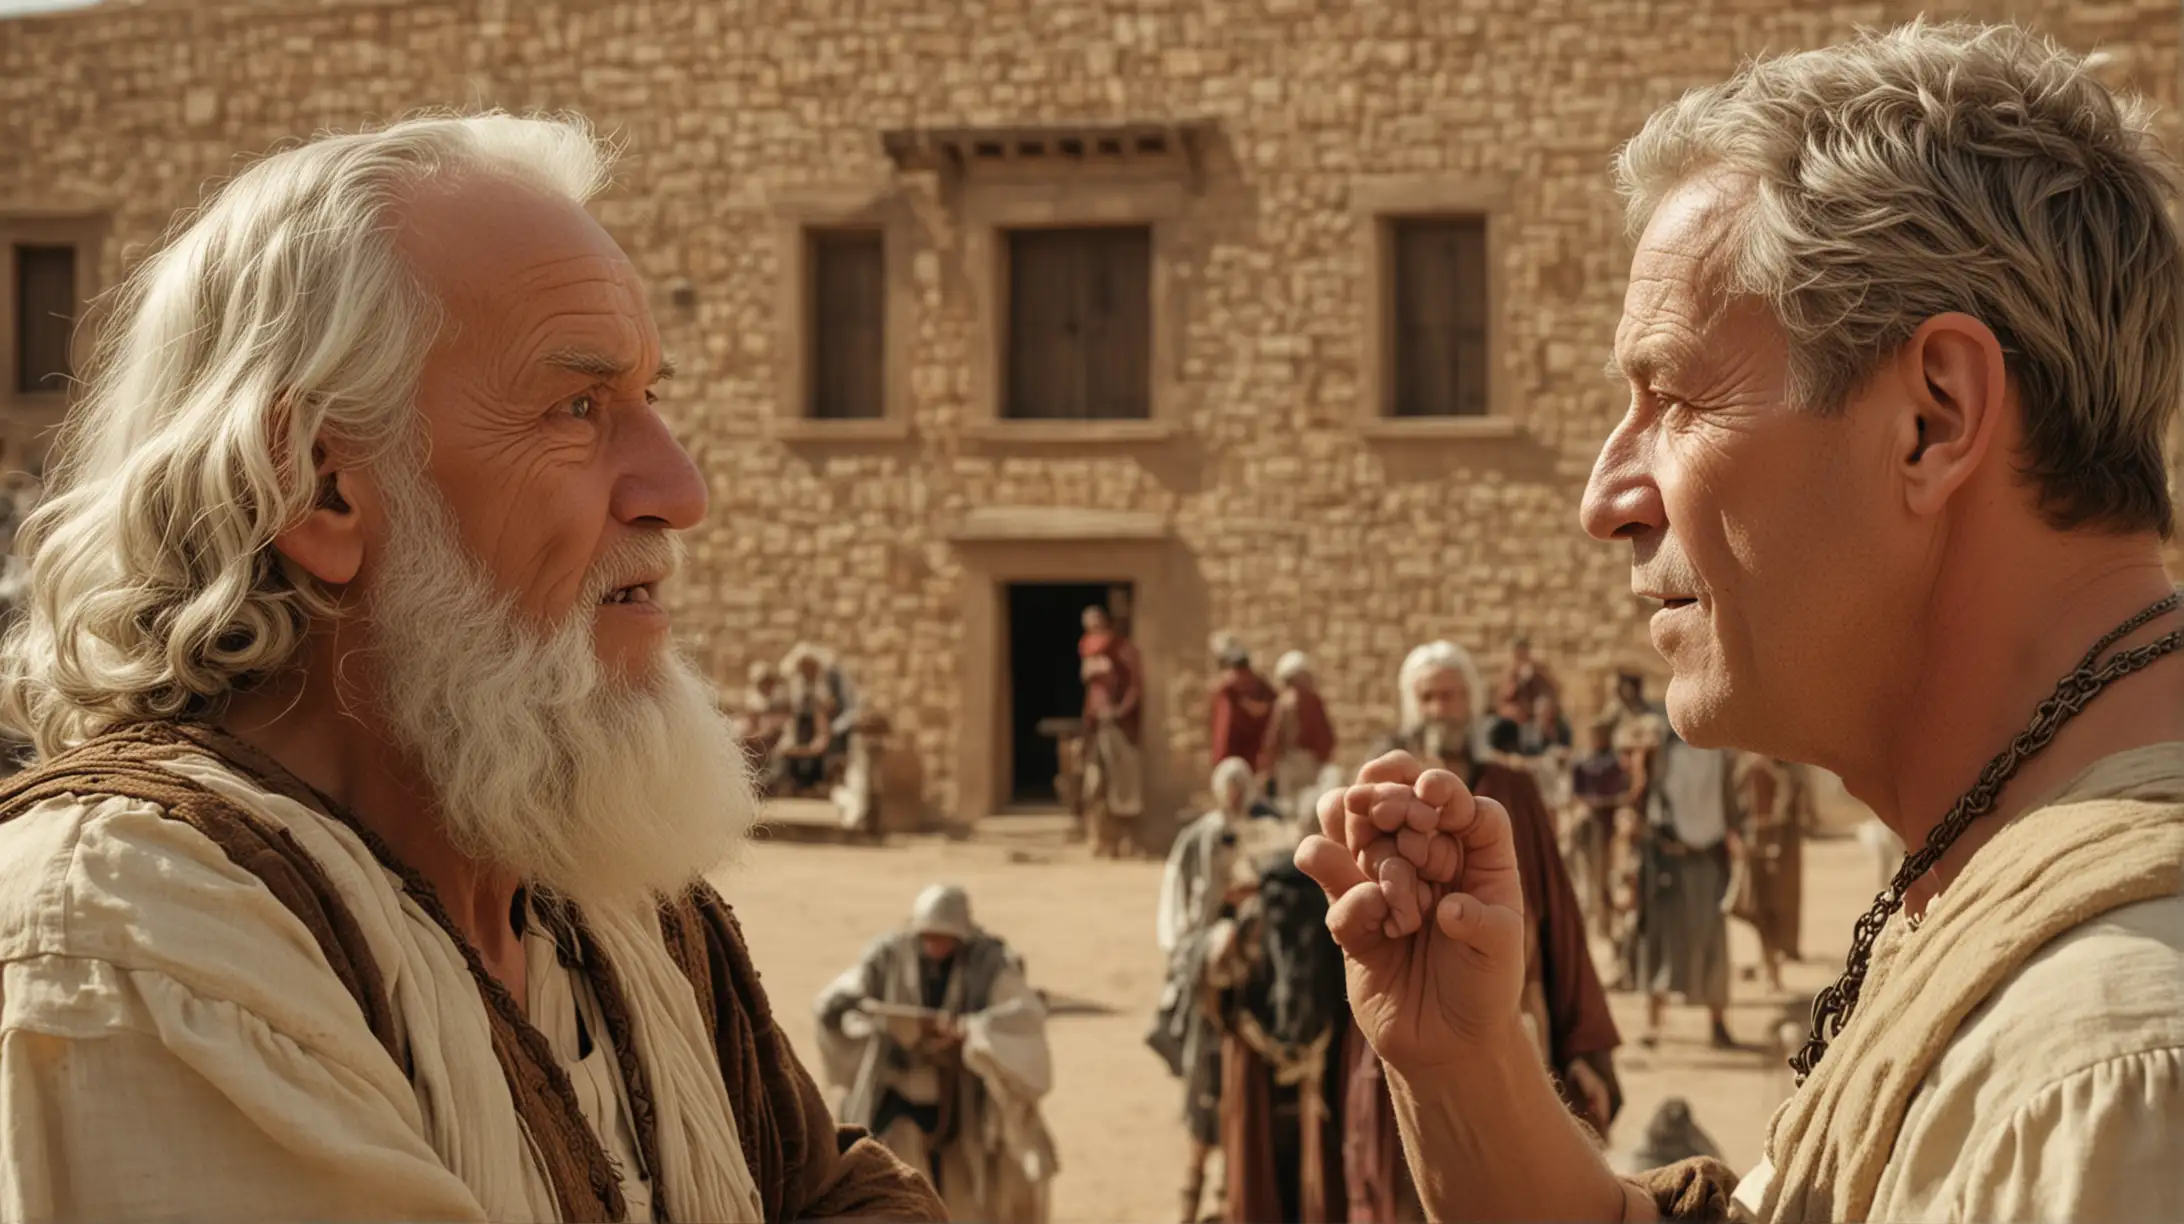 Biblical Era Encounter Strong Man Conversing with Elderly Couple in Desert Town